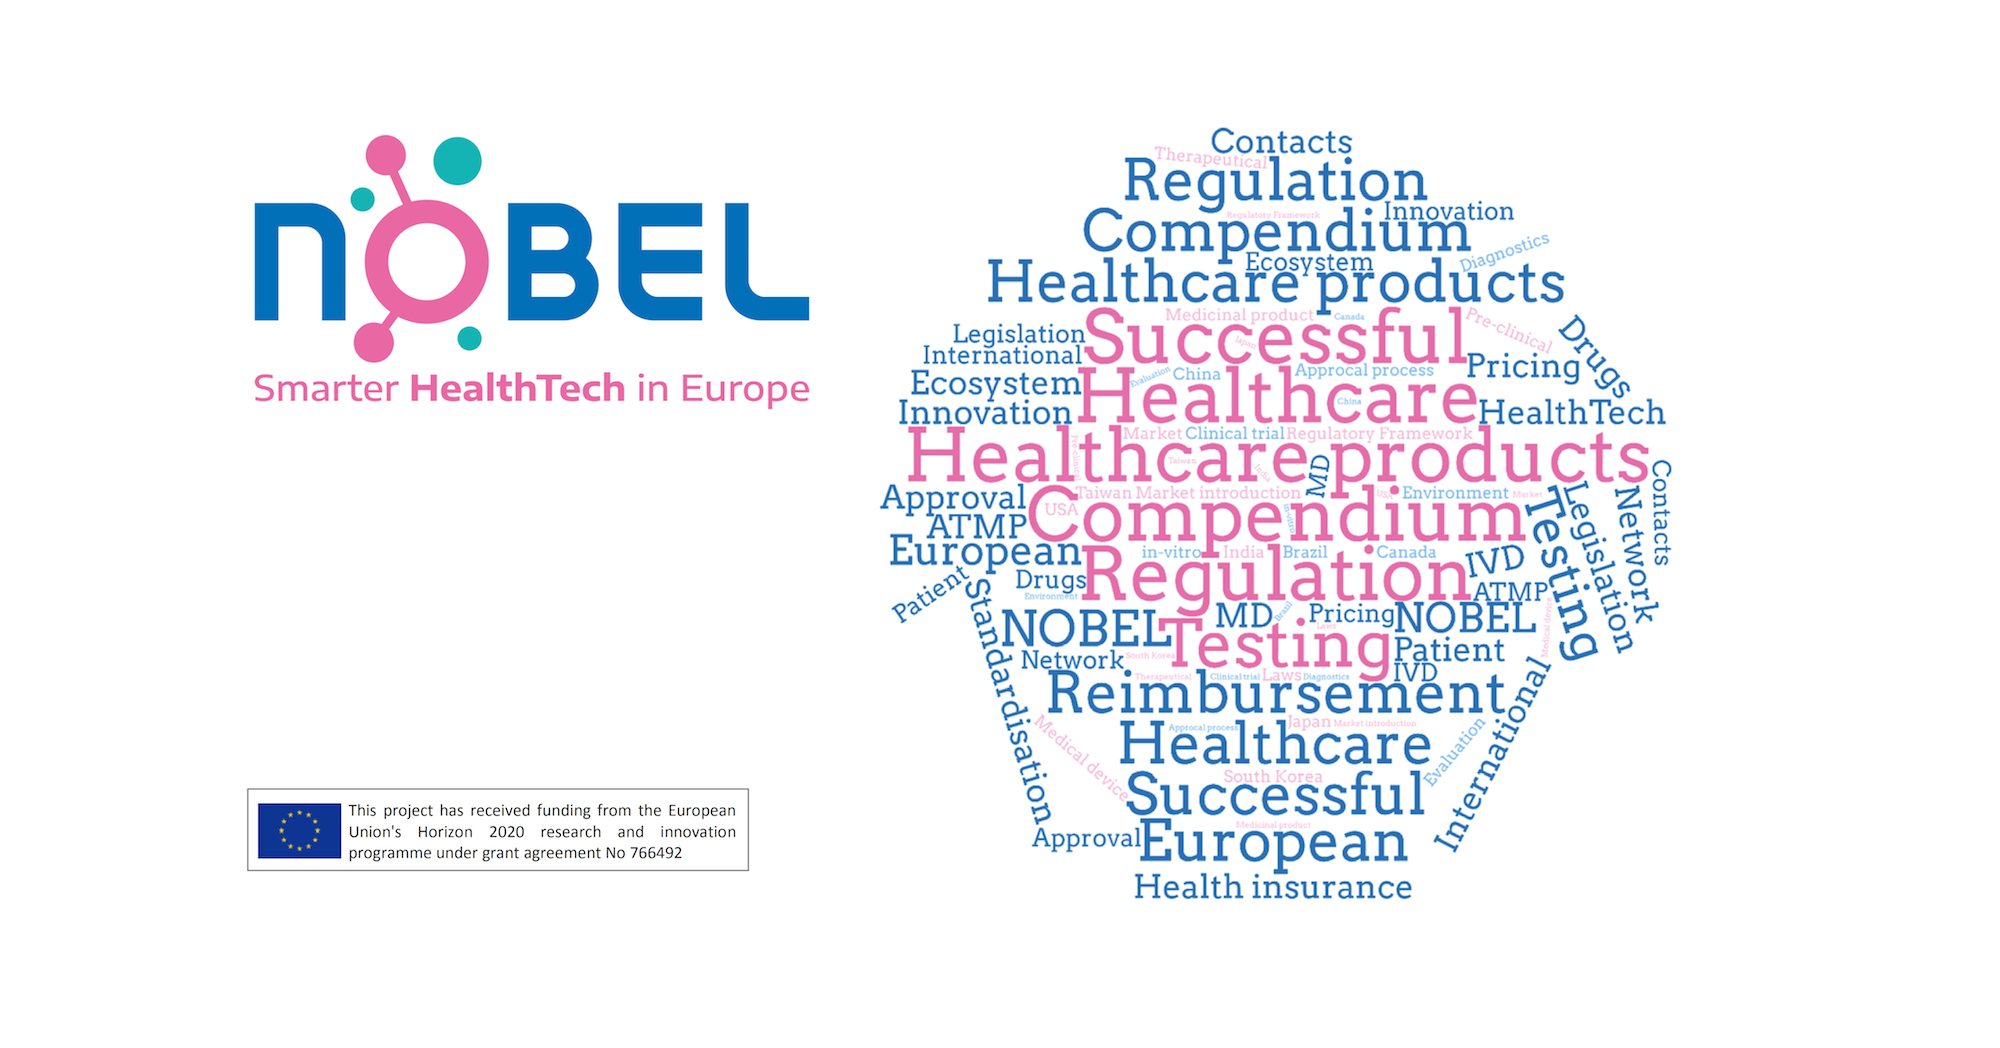 NOBEL compendium regulatory healthtech testing reimbursement regulatory